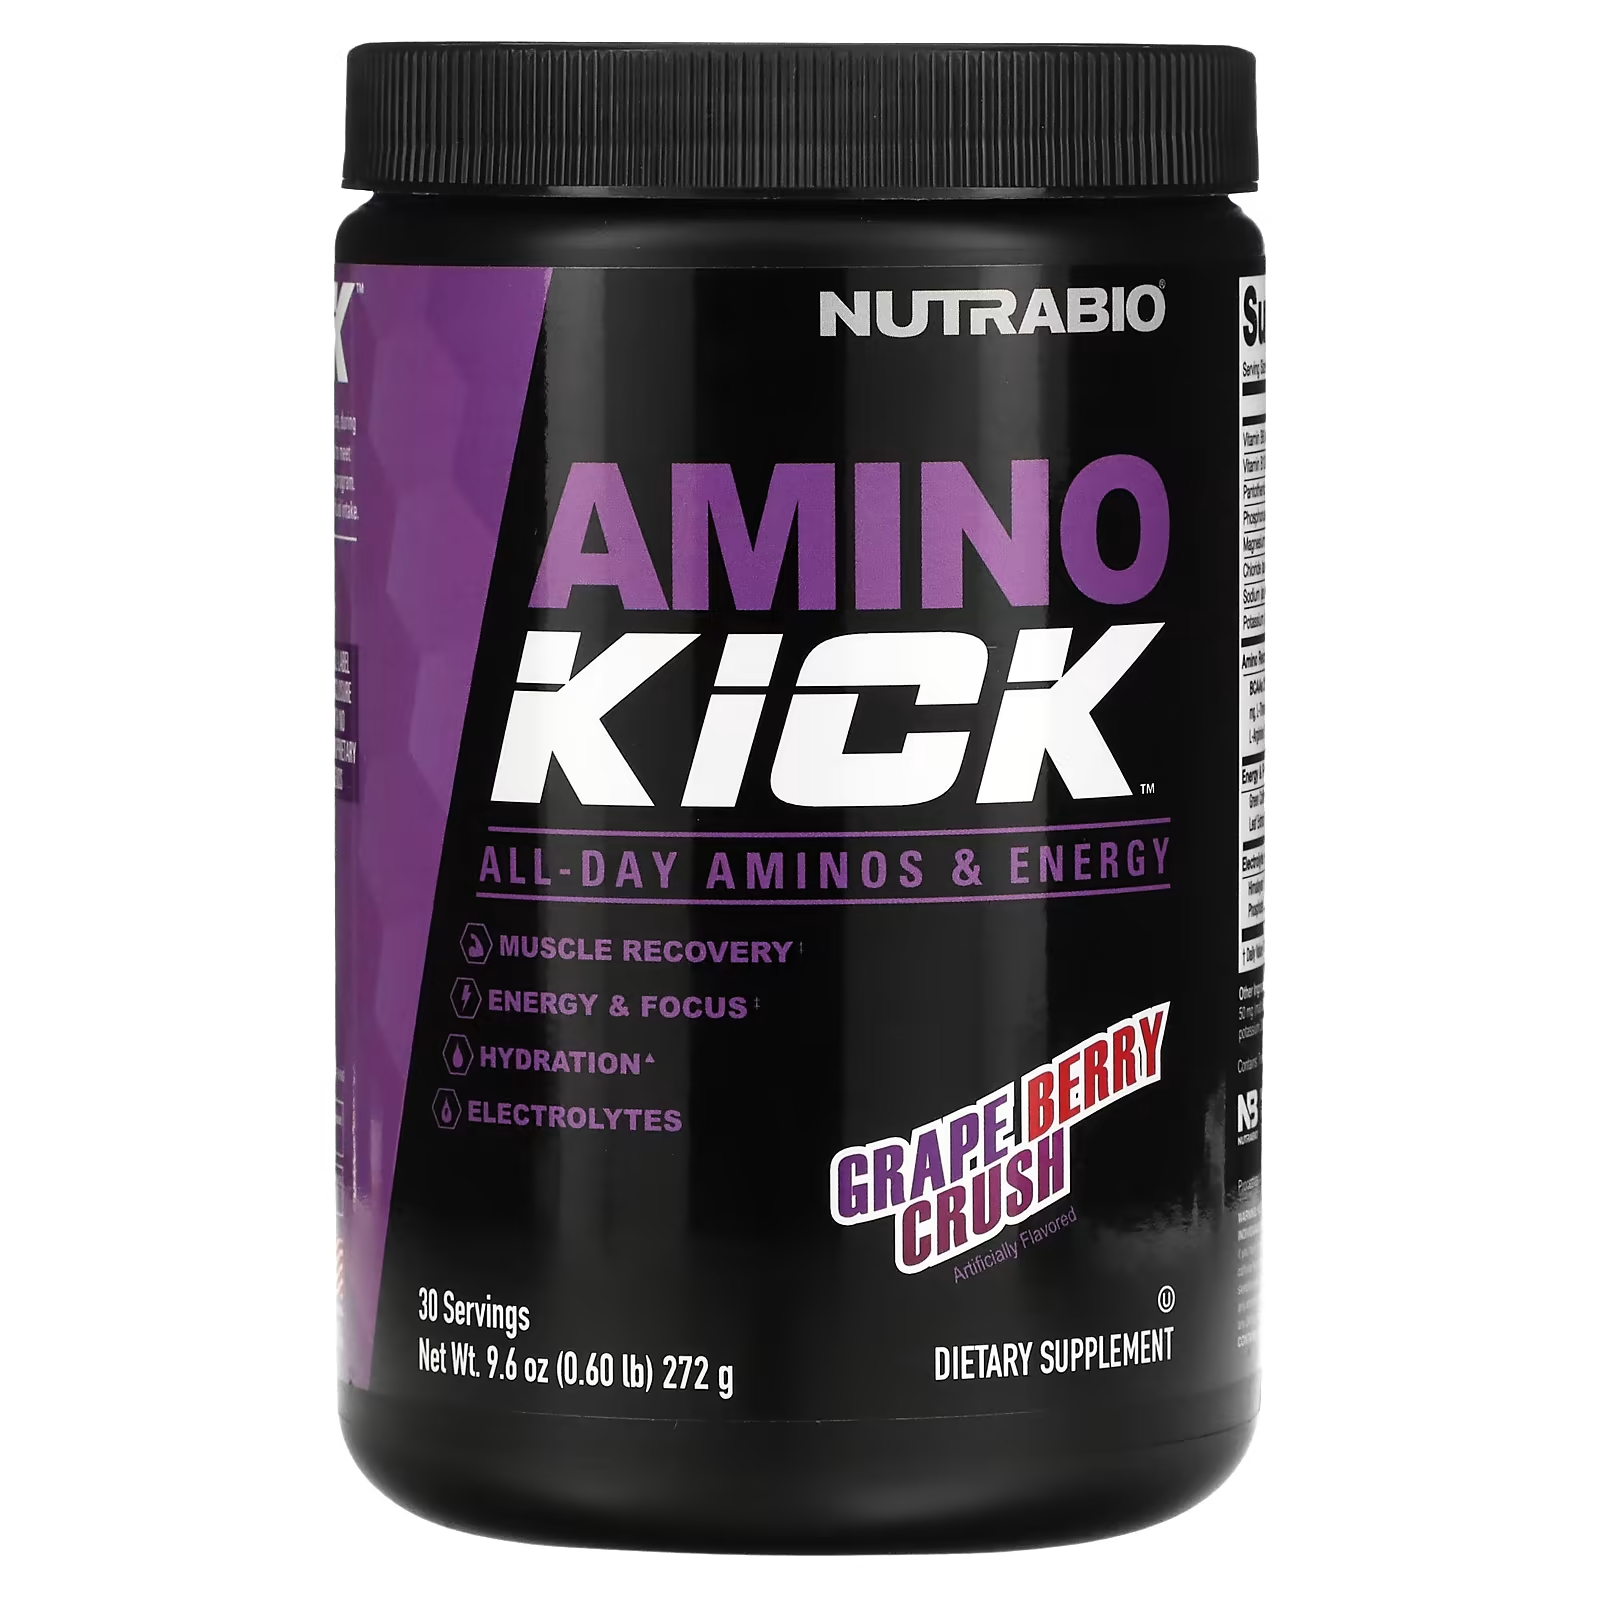 Пищевая добавка NutraBio Amino Kick Grape Berry Crush, 272 г nutrabio labs amino kick grape berry crush 272 г 0 6 фунта